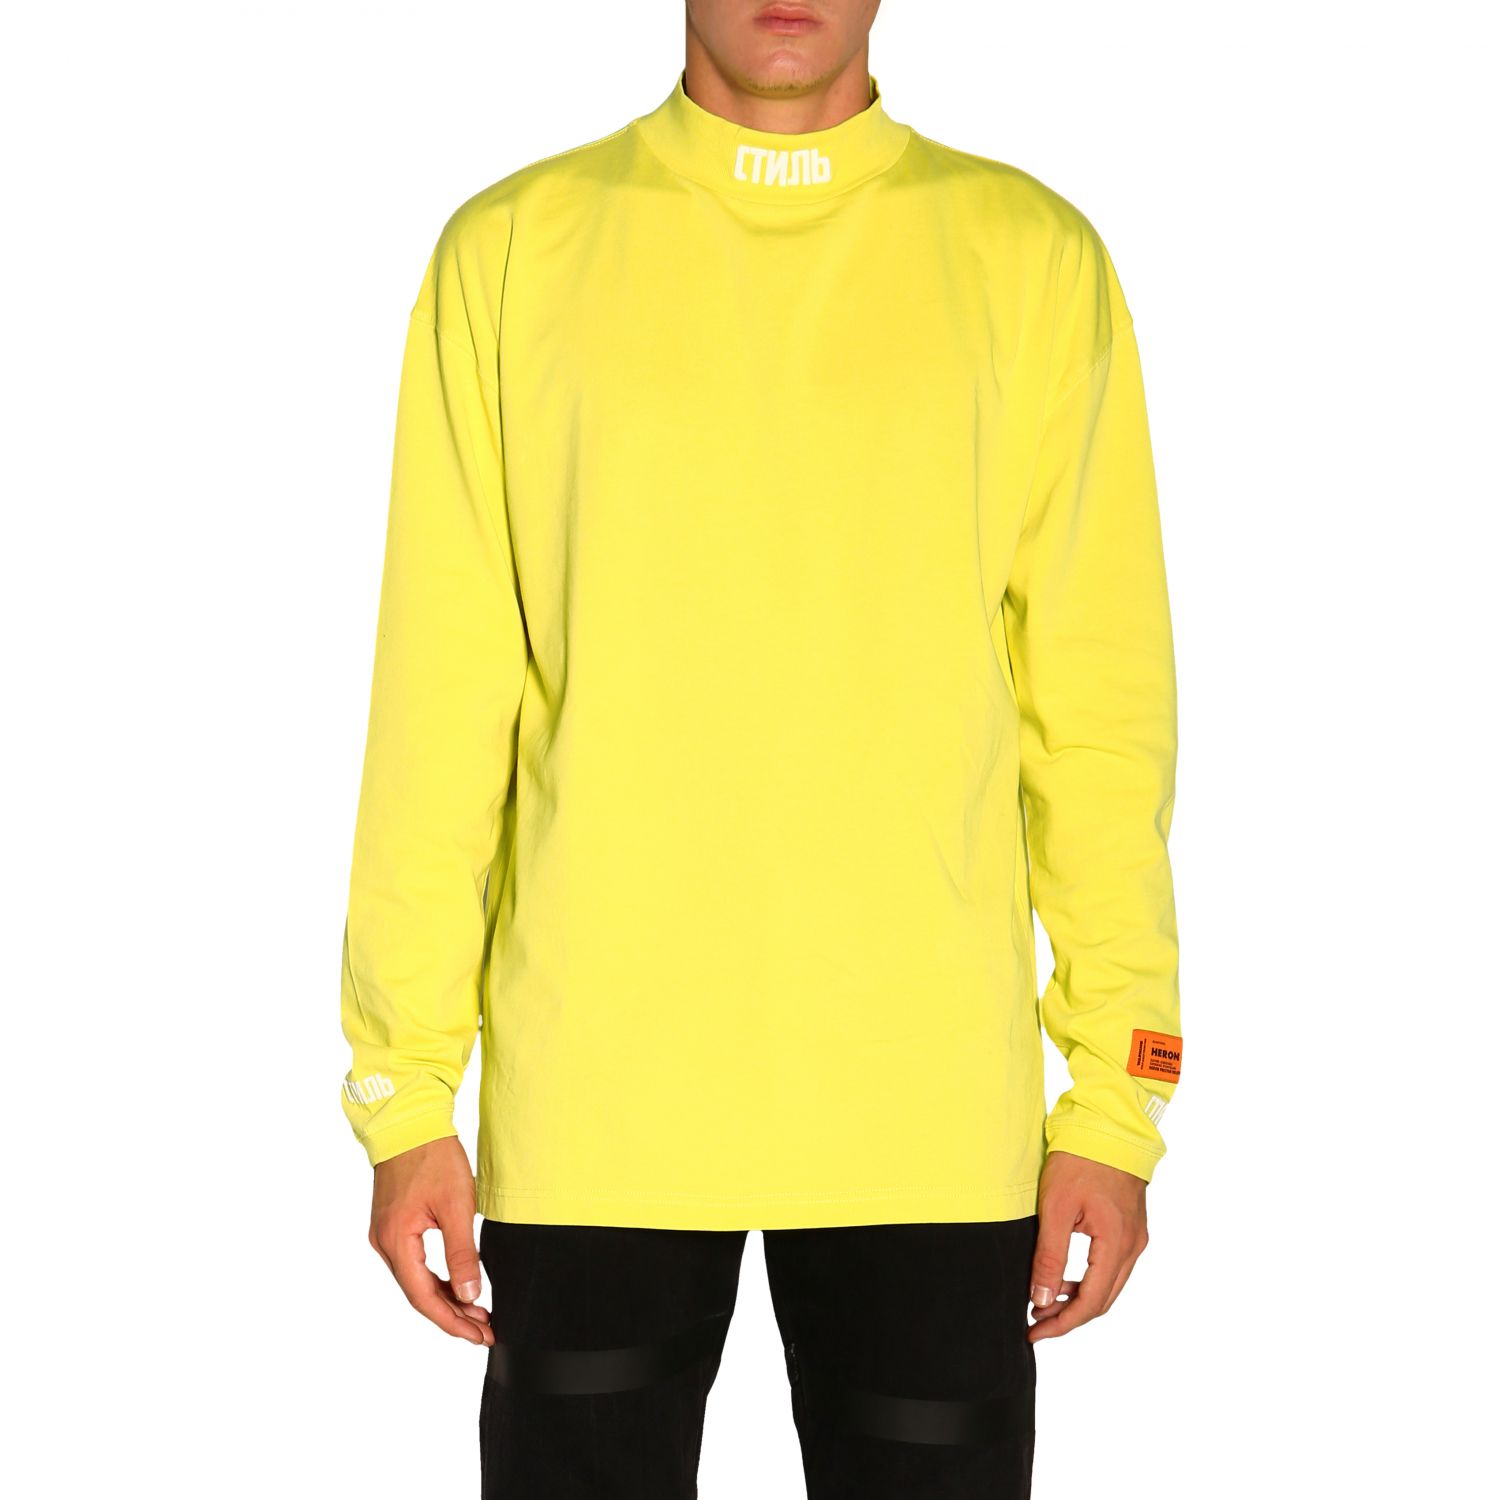 Heron Preston Outlet: sweatshirt for men - Yellow | Heron Preston ...